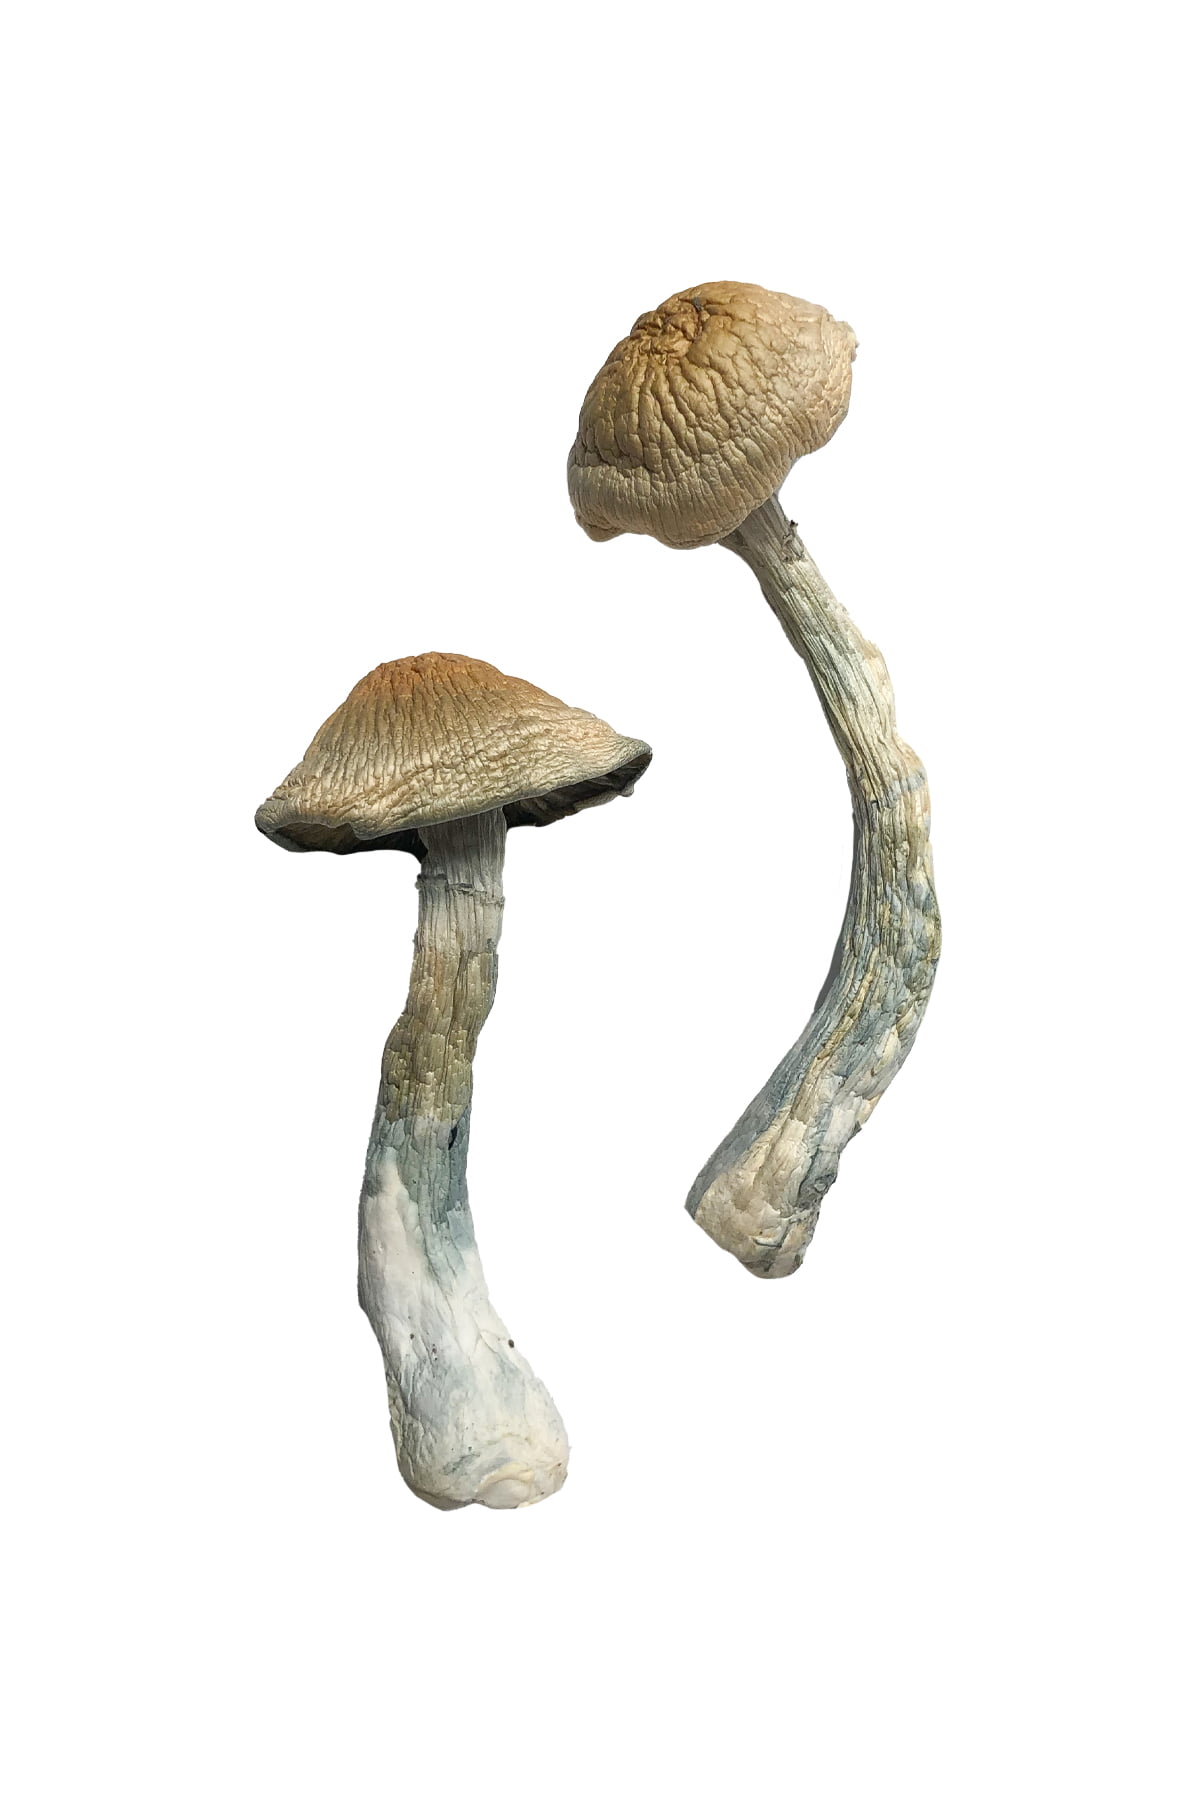 HillBilly Magic Mushrooms for sale